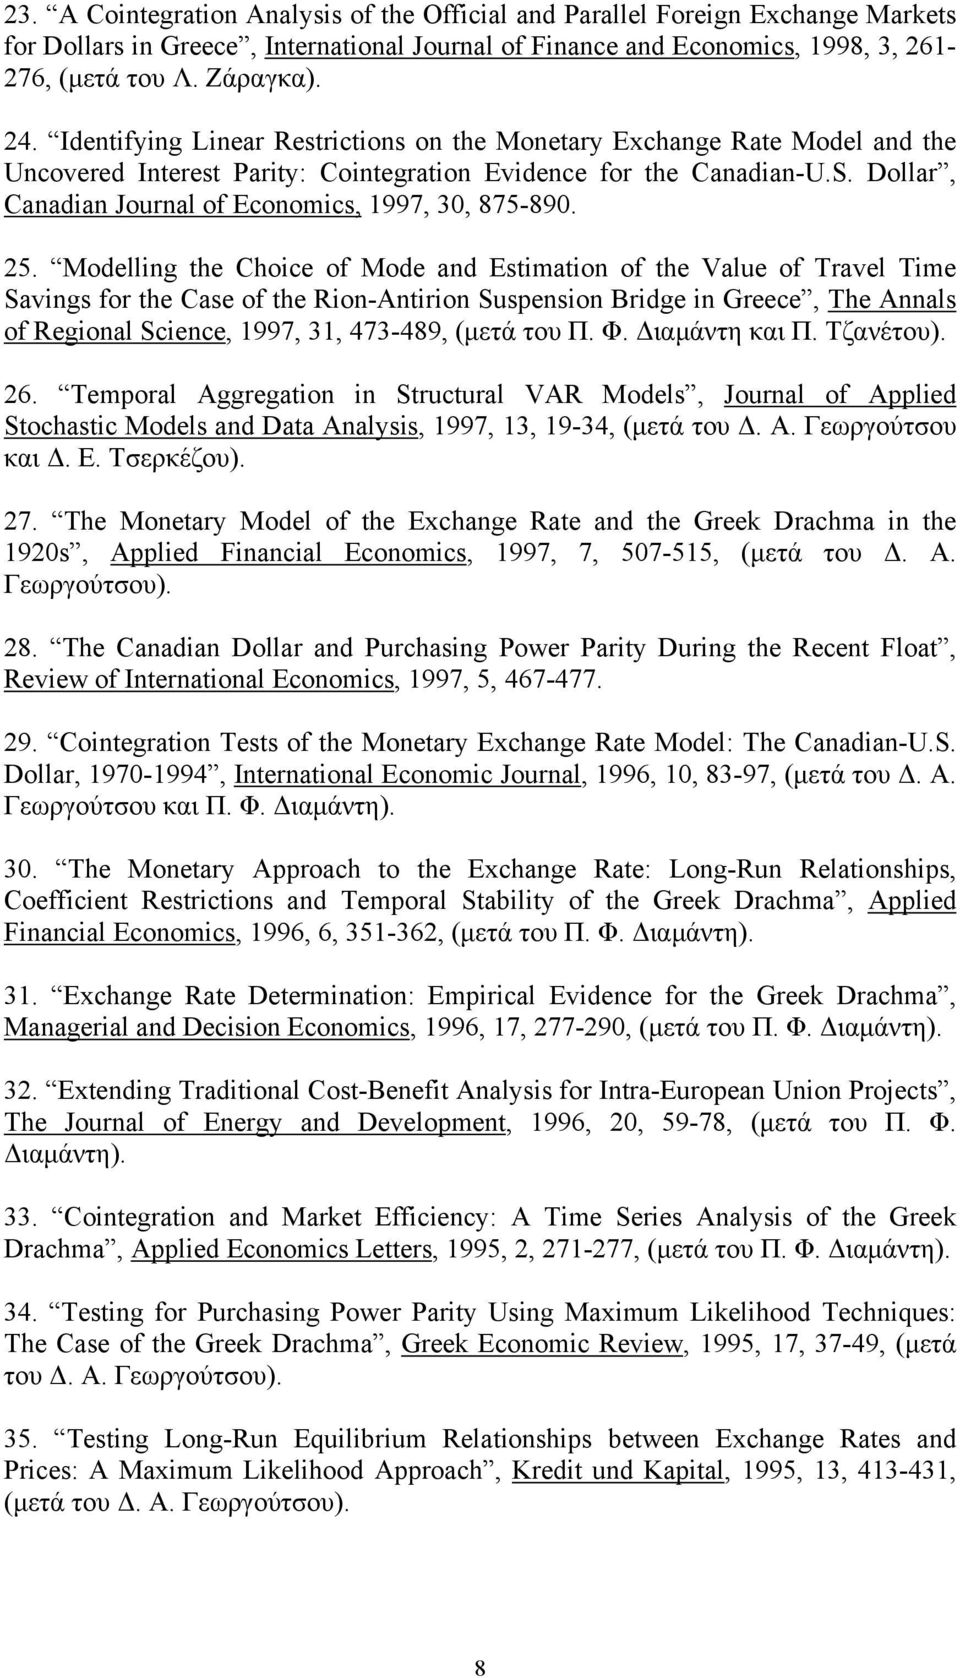 Dollar, Canadian Journal of Economics, 1997, 30, 875-890. 25.